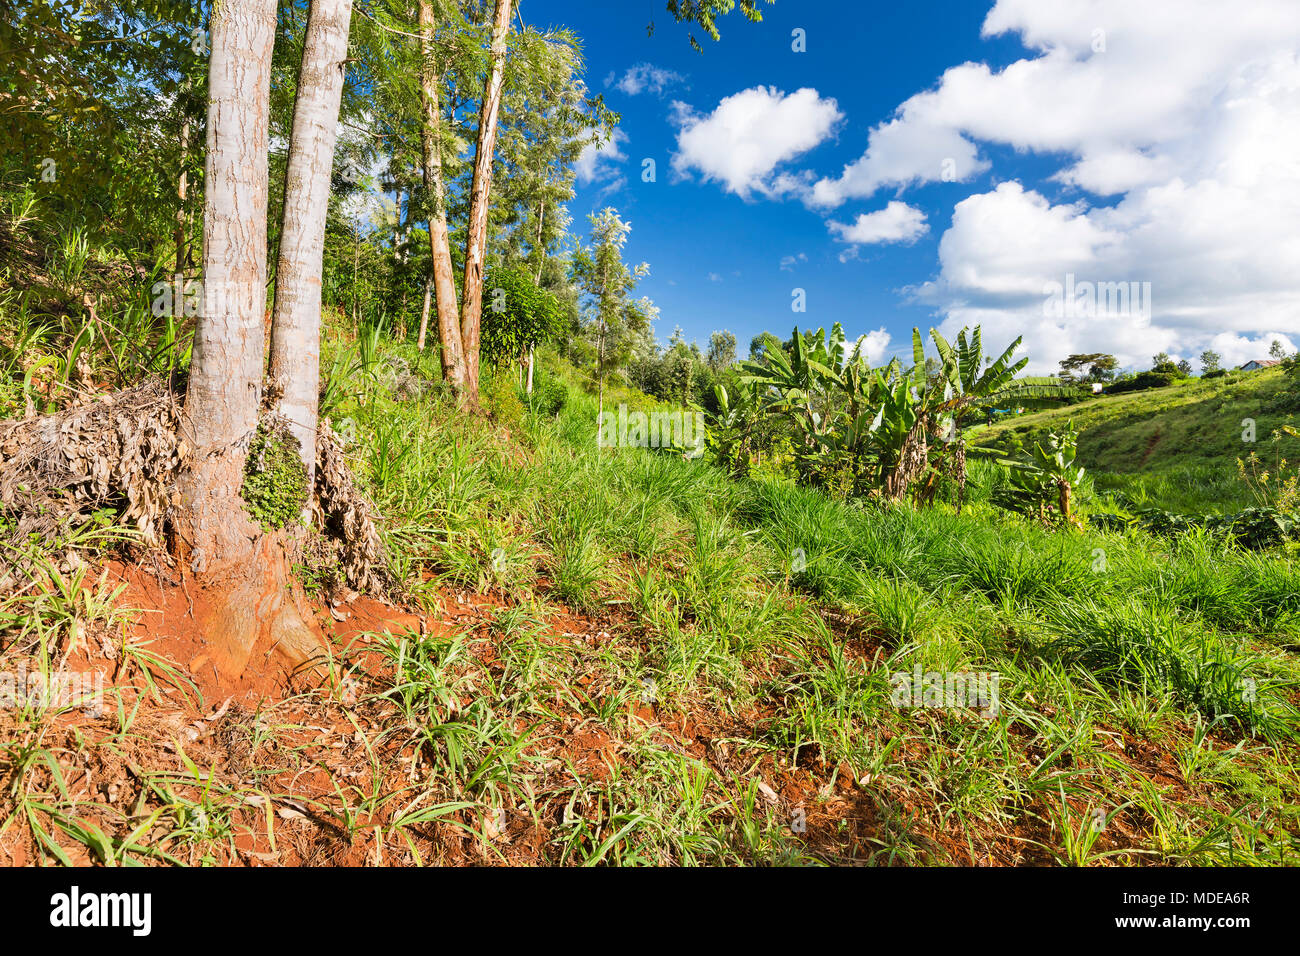 Napier Grass crop on red soil in the highland valleys of Kiambu County north of Nairobi in Kenya. Stock Photo